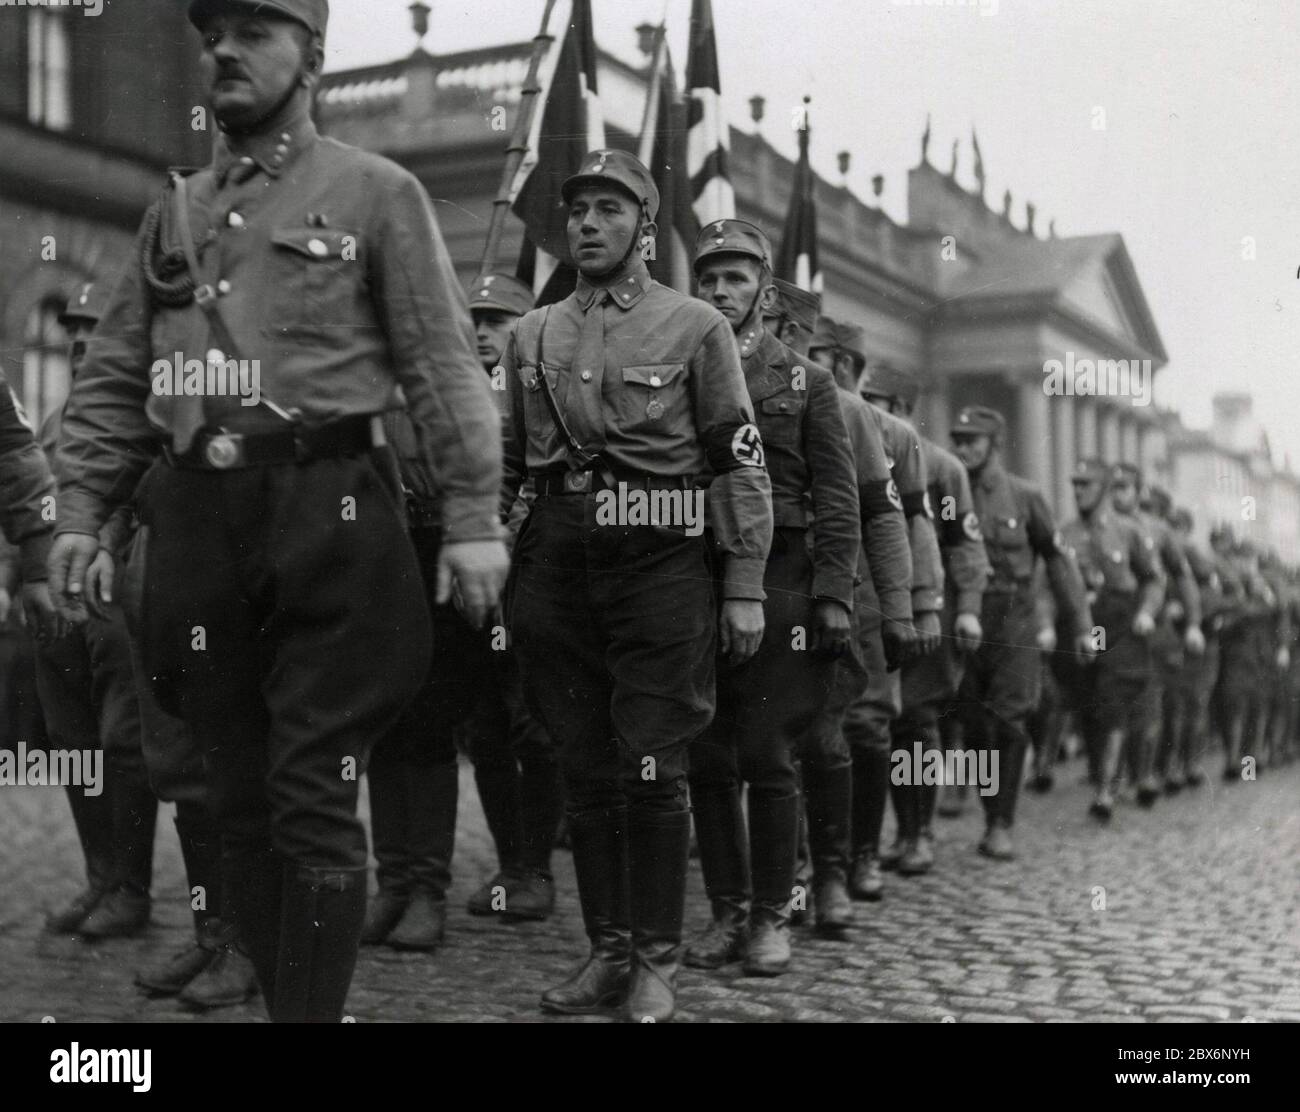 March of the SA. Heinrich Hoffmann Photographs 1933 Adolf Hitler's ...